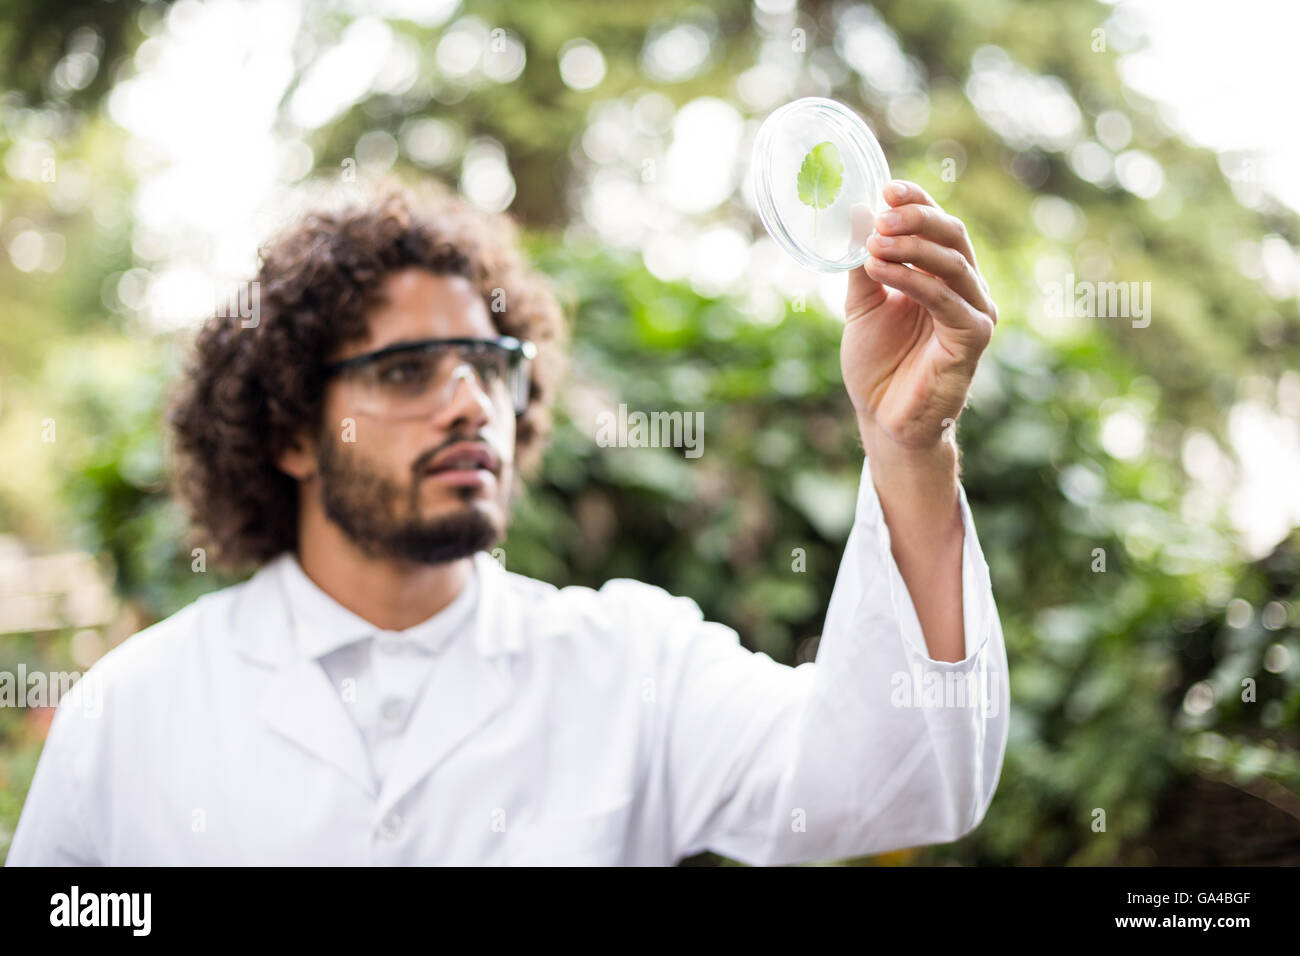 Male scientist examining leaf on petri dish Stock Photo